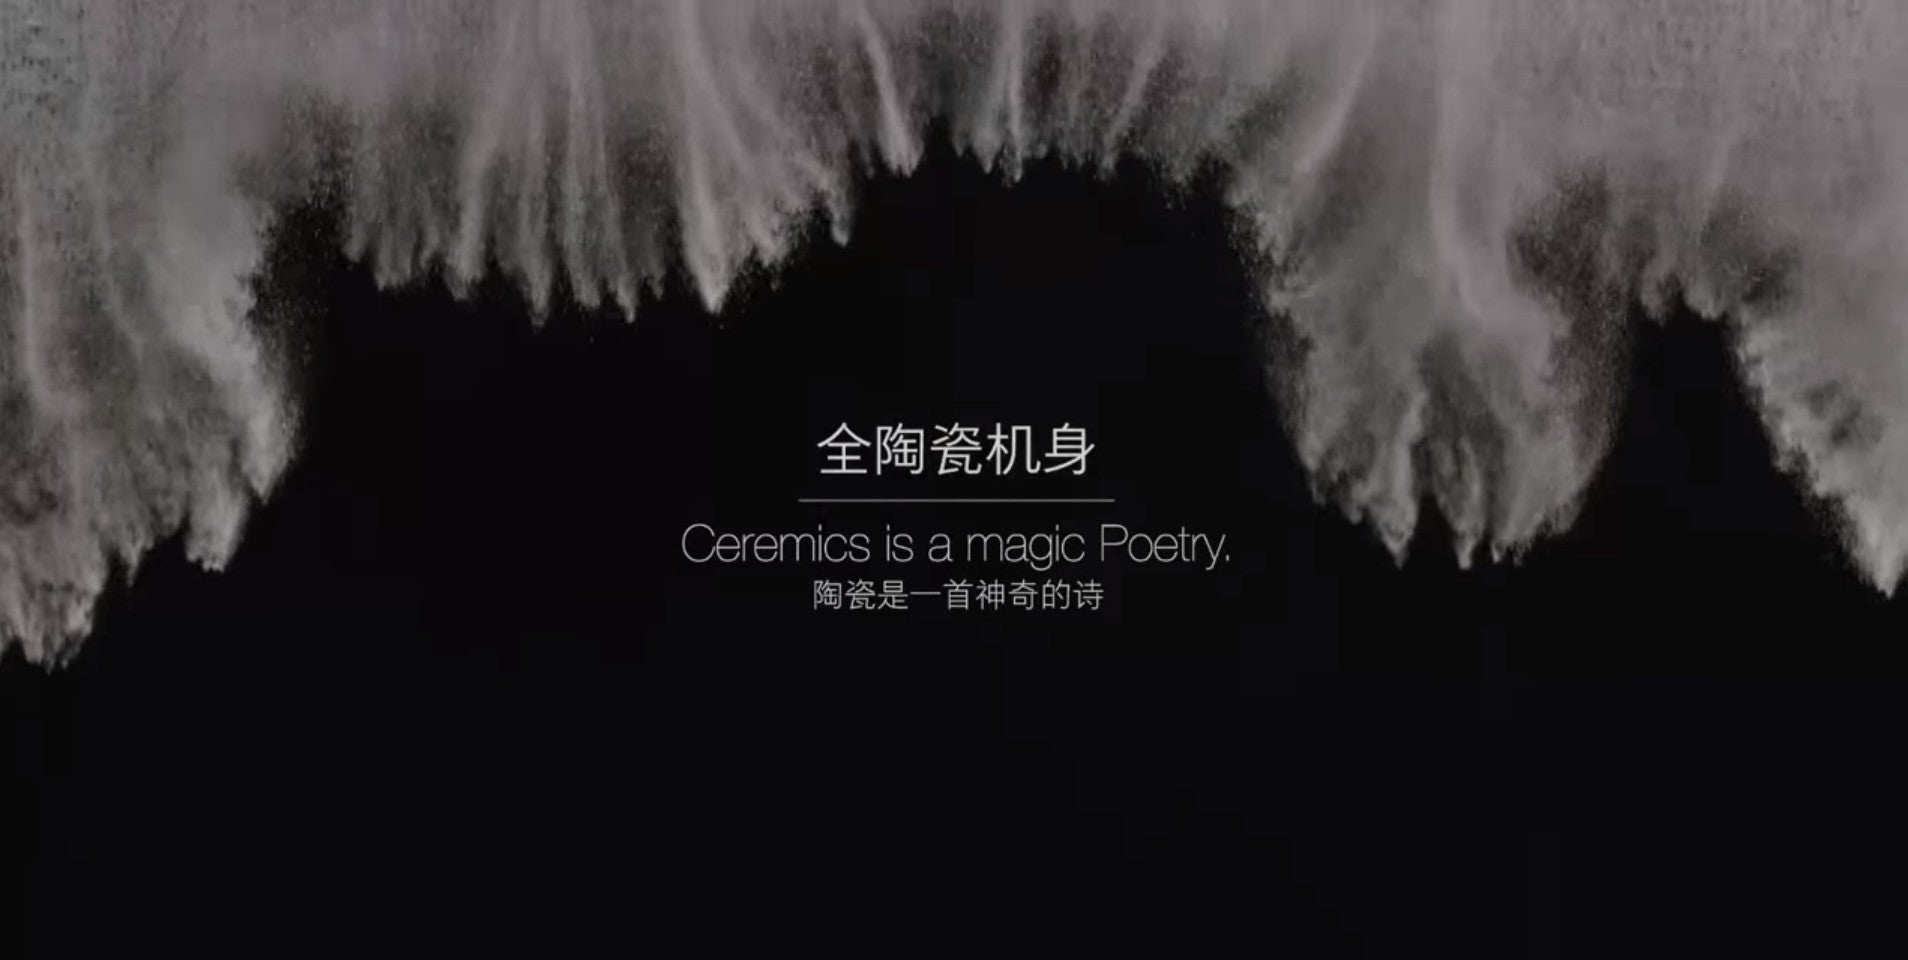 New Xiaomi Mi MIX video explains why „Ceramics is a magic Poetry”